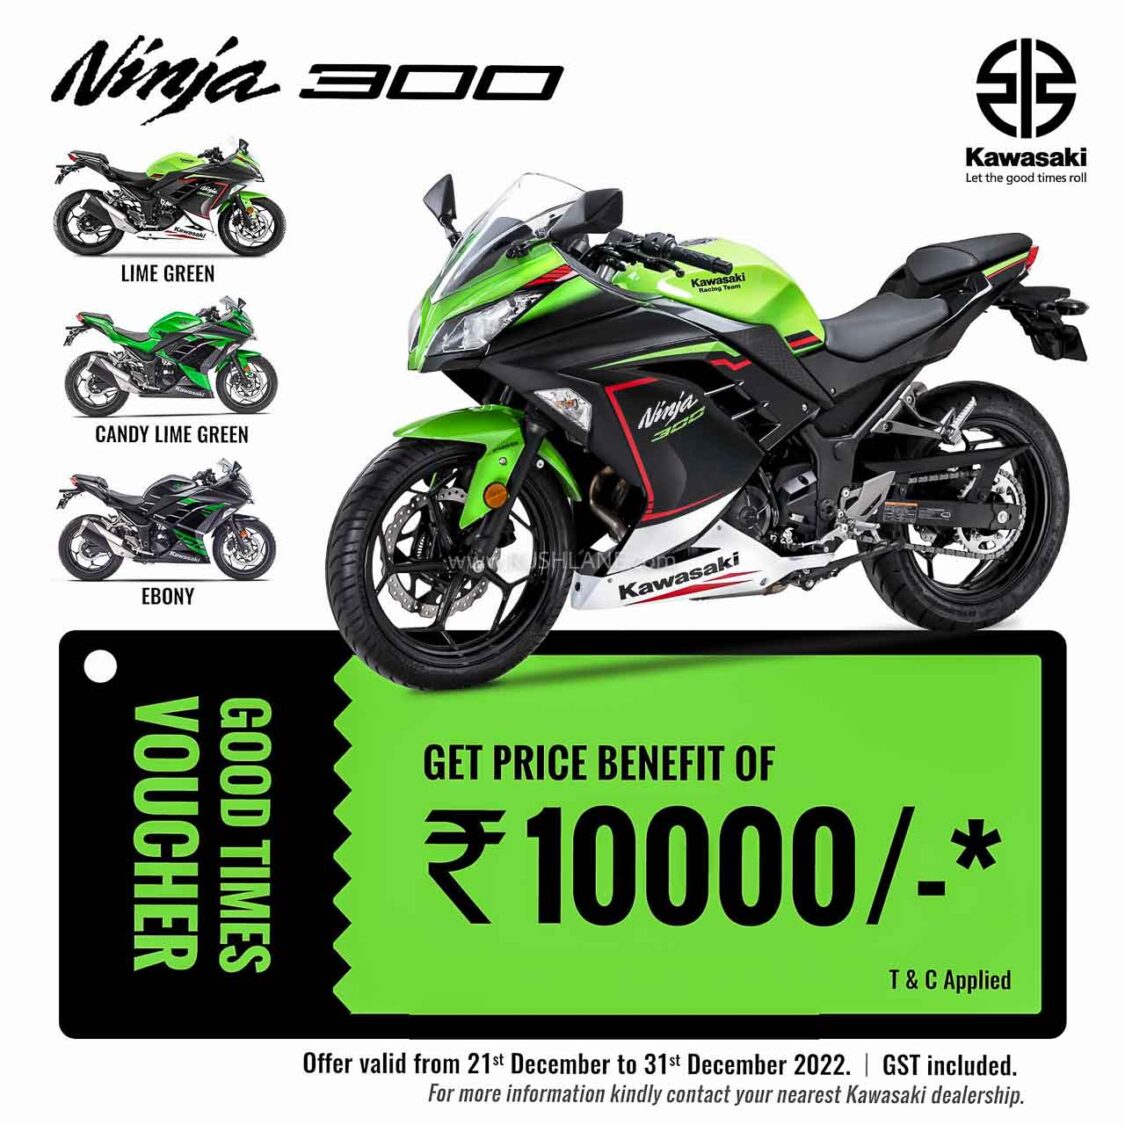 2022 Kawasaki Ninja 300 price cut by Rs 10,000